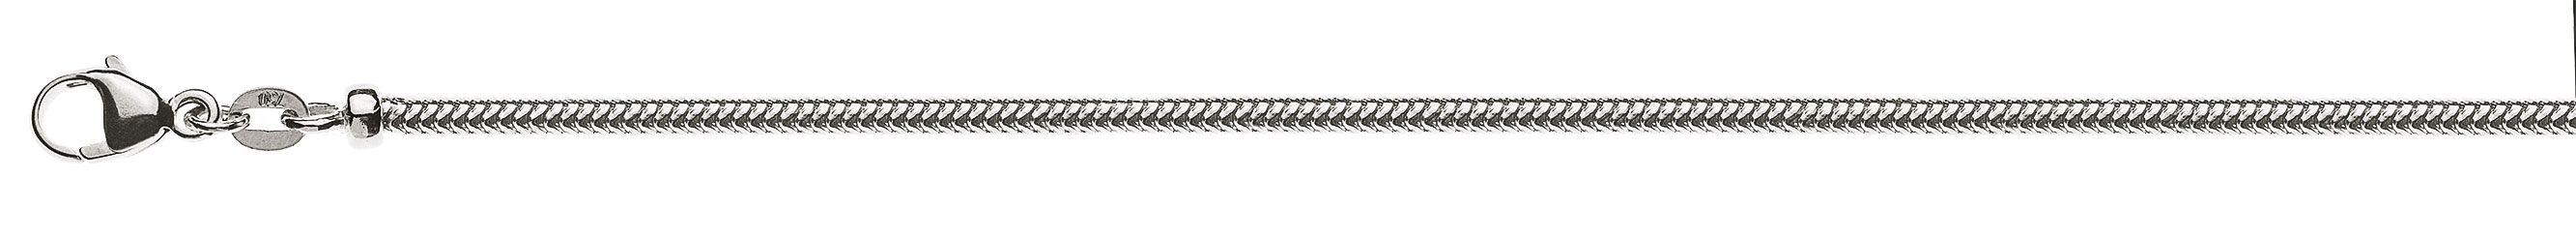 AURONOS Prestige White Gold 18K Snake Chain Necklace 50cm 2.4mm